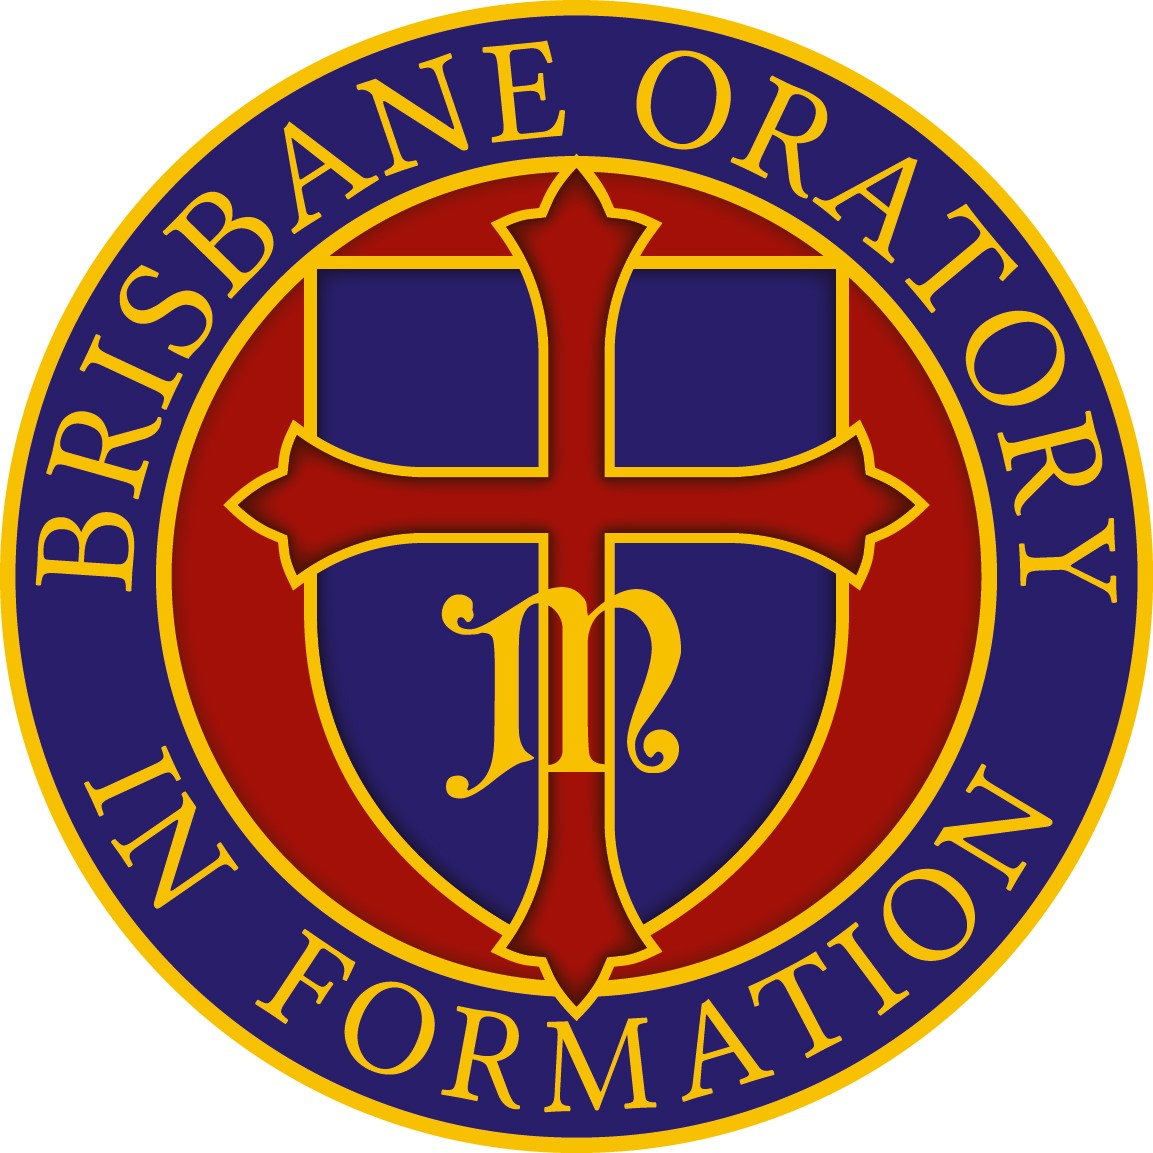 The Brisbane Oratory in Formation logo